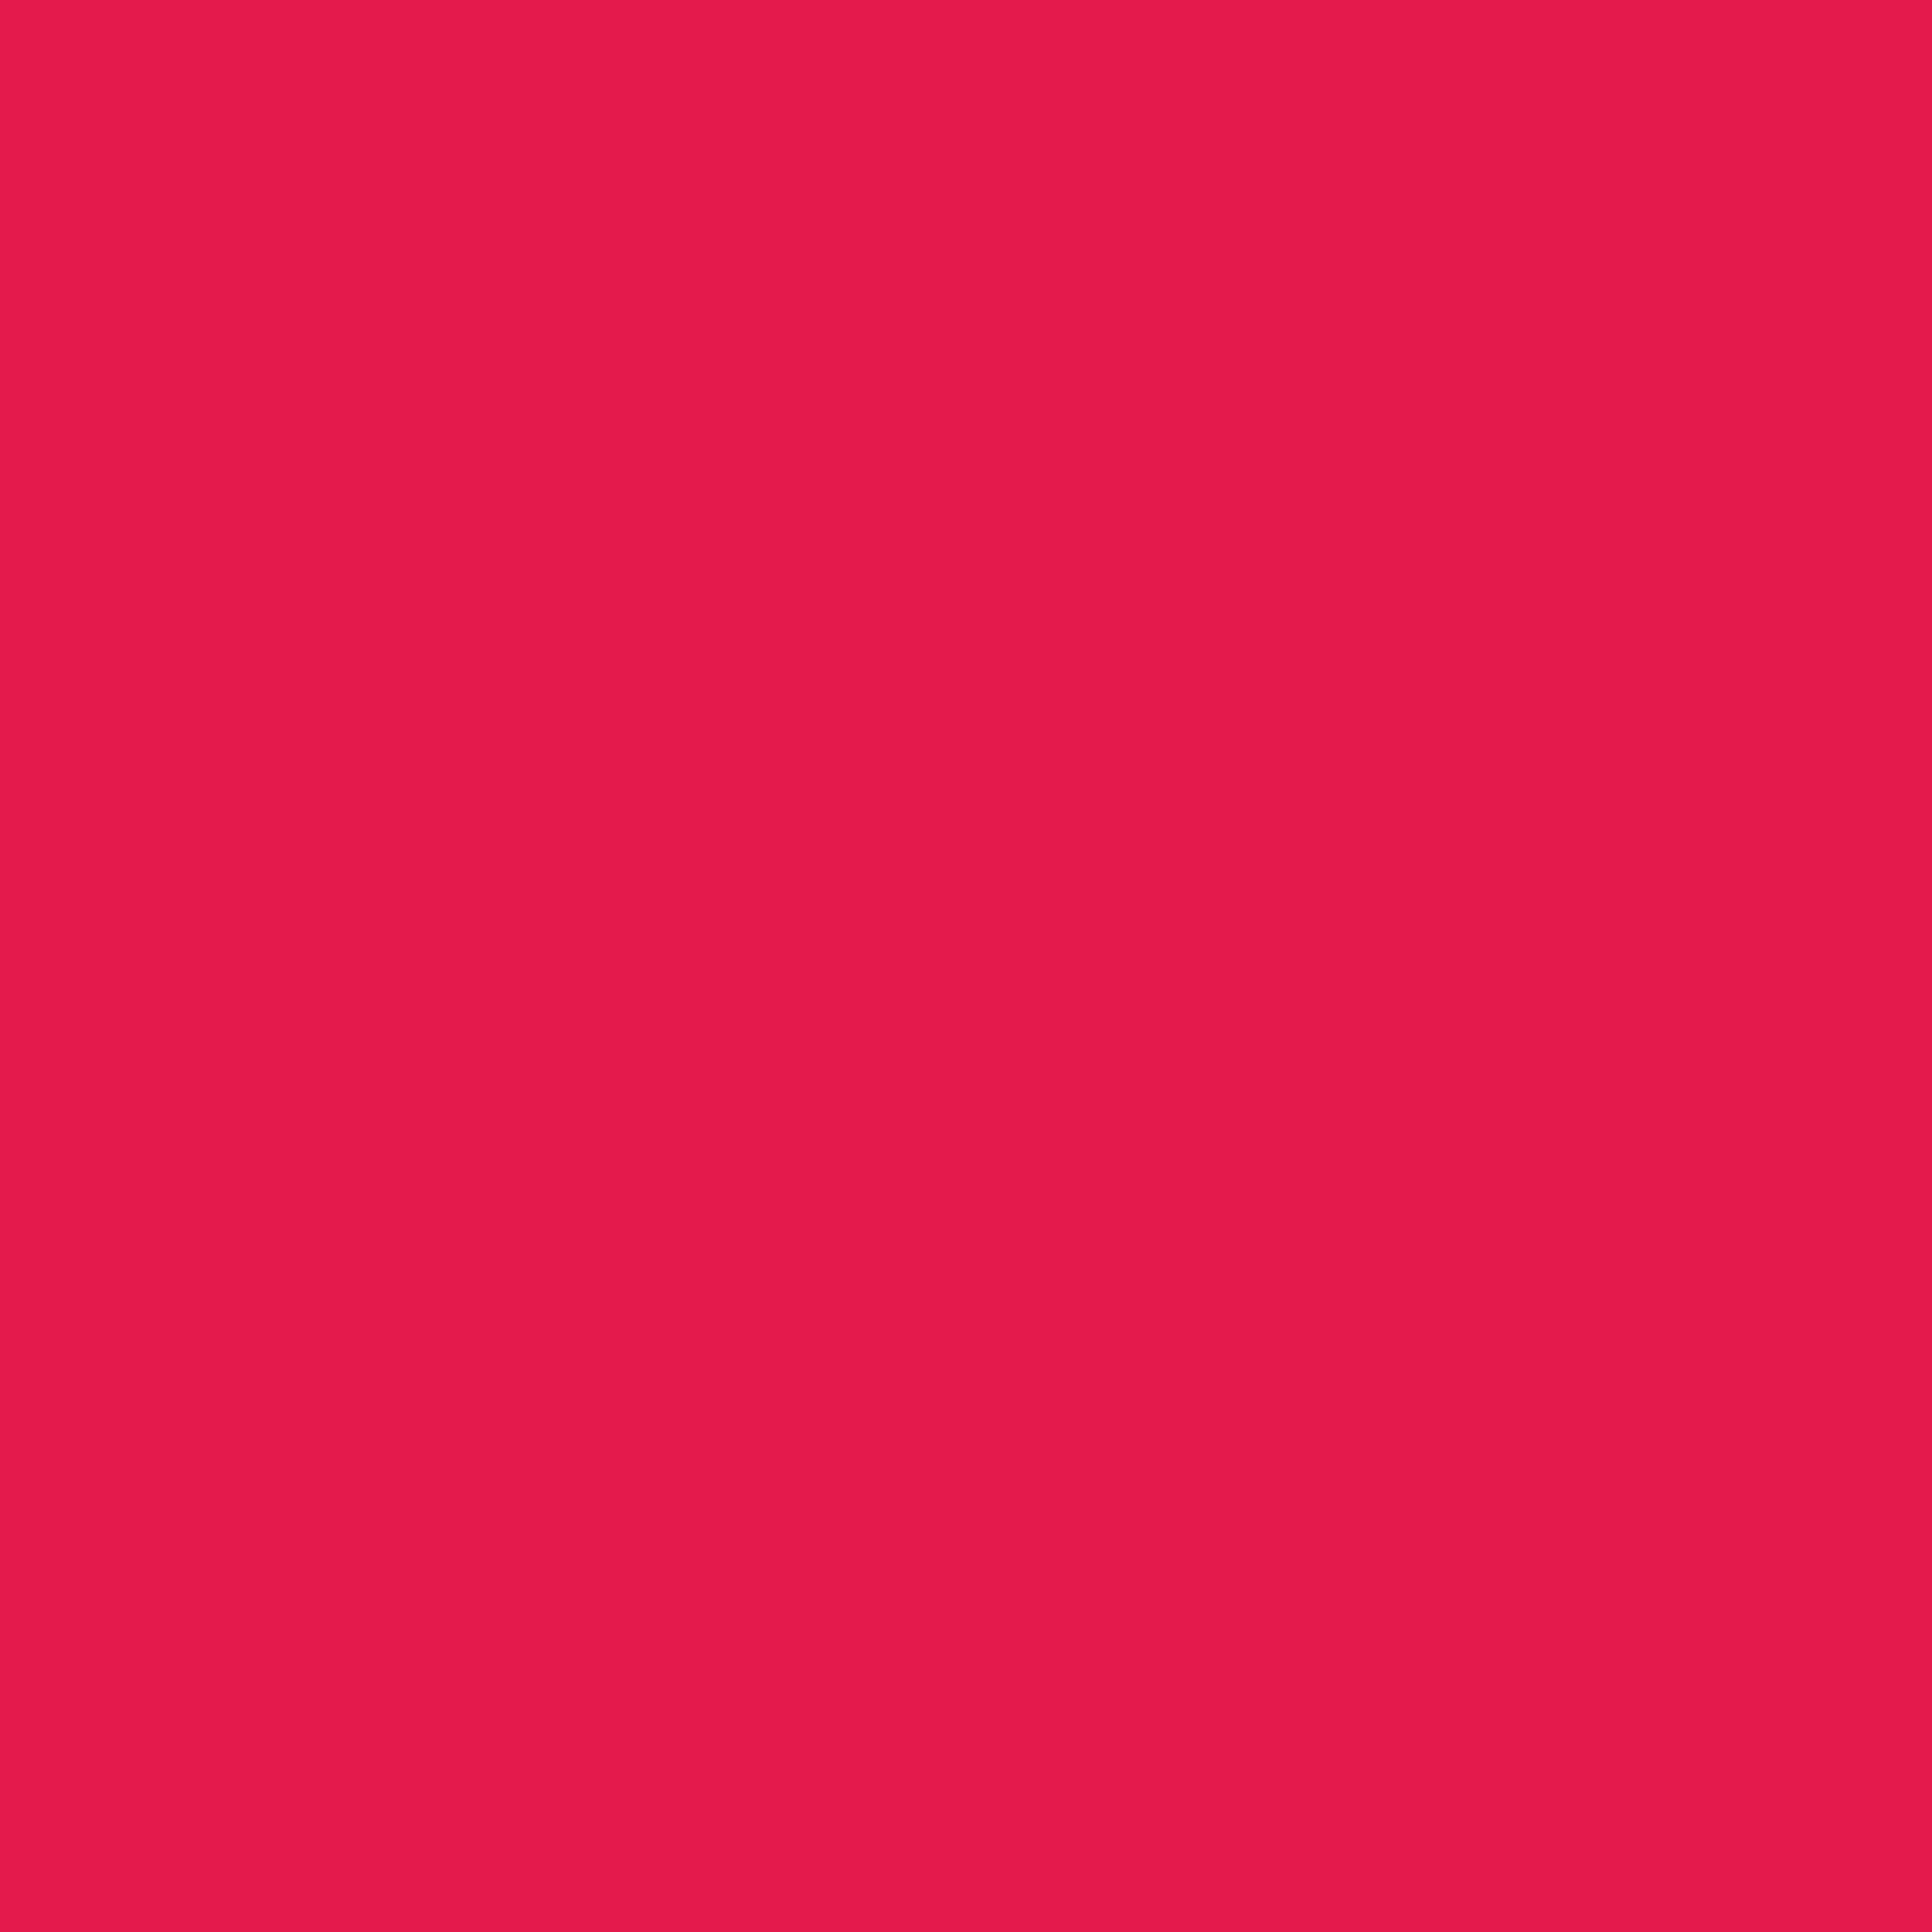 2732x2732 Spanish Crimson Solid Color Background